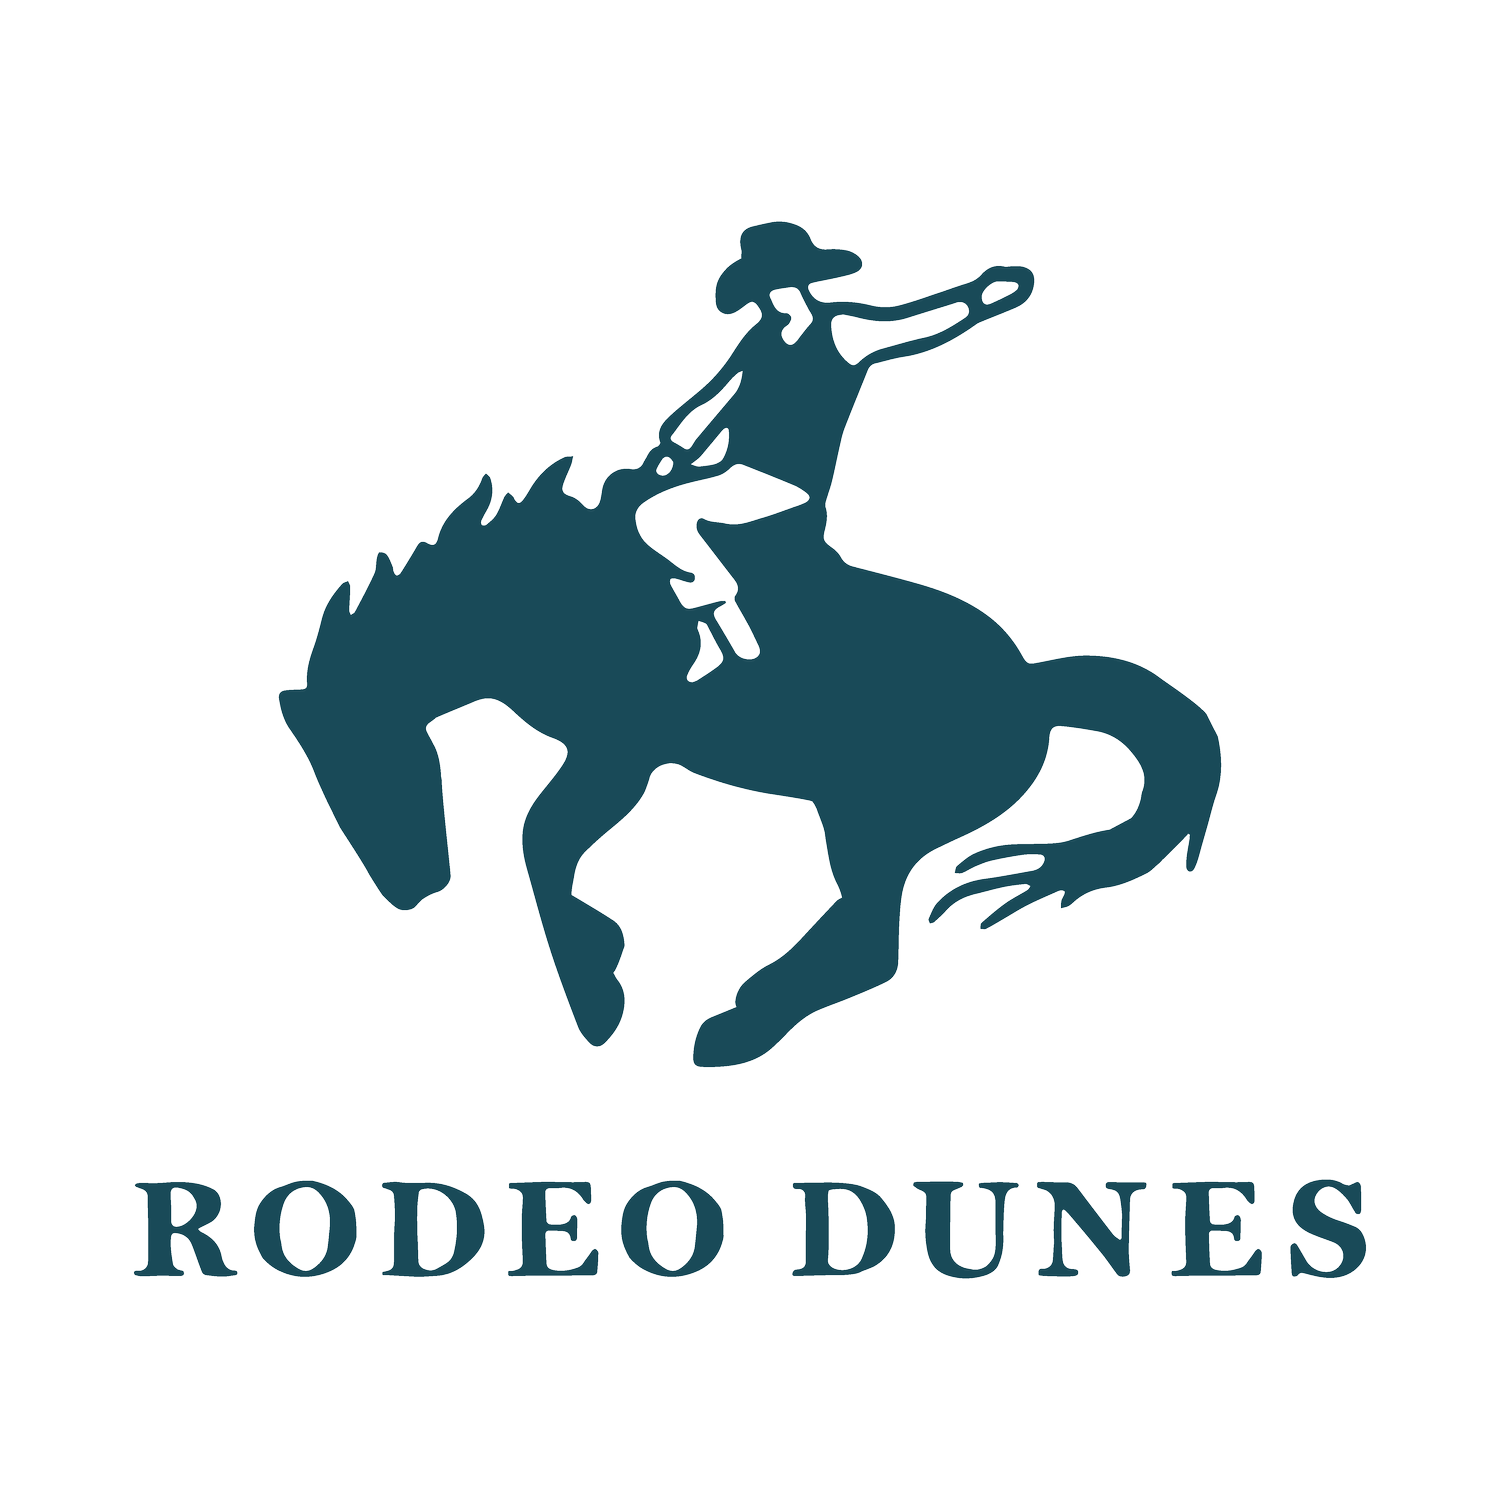 Introducing Rodeo Dunes